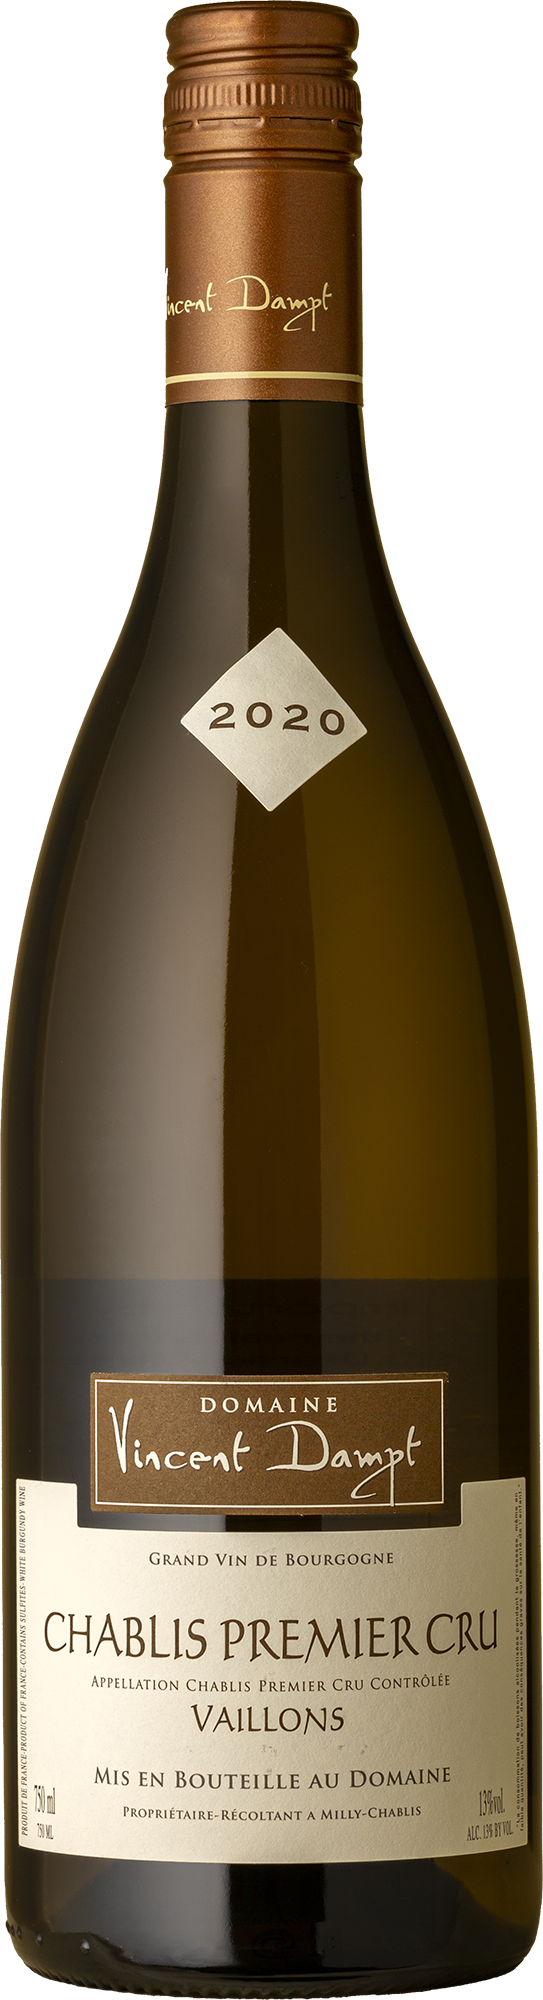 Vincent Dampt - Chablis 1er Cru Vaillons Chardonnay 2020 White Wine